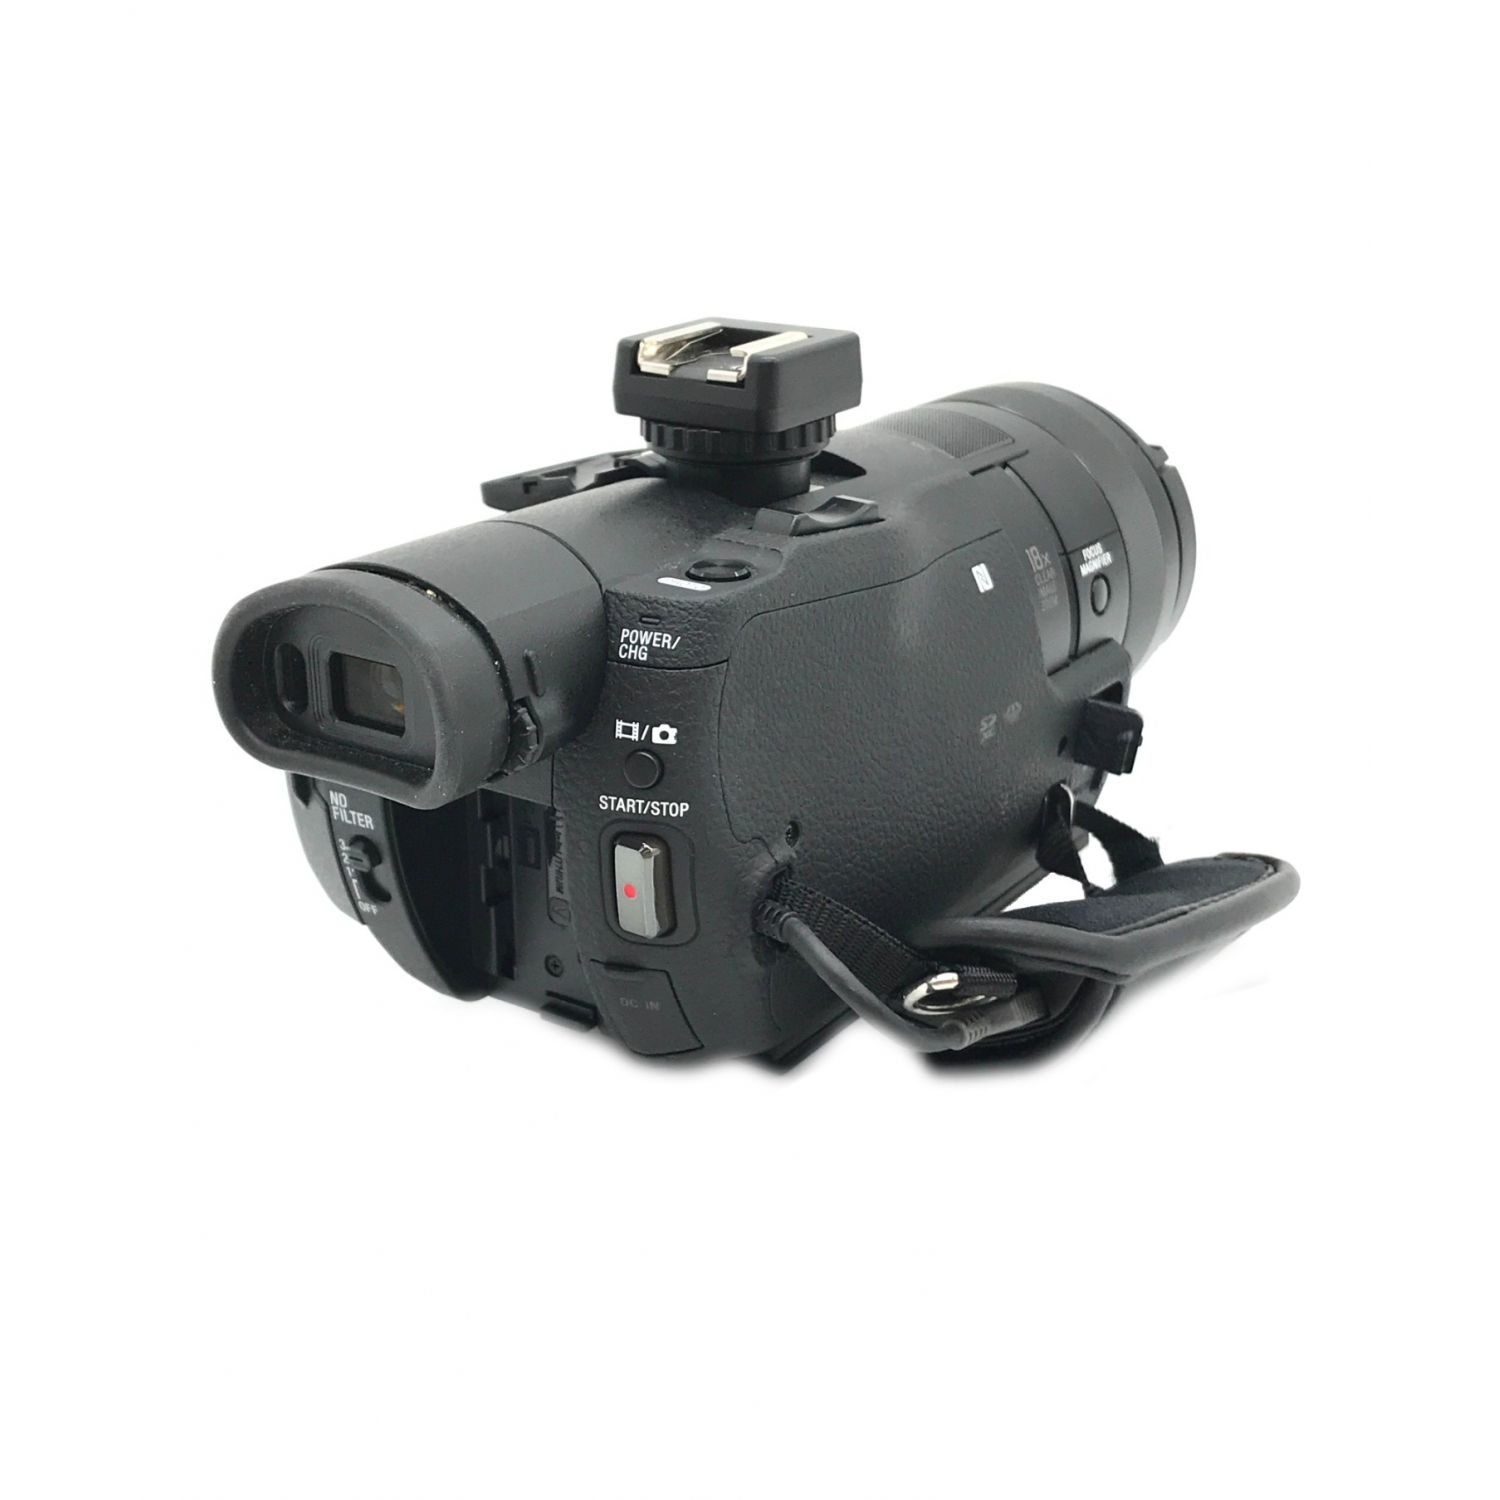 SONY (ソニー) 4K対応デジタルビデオカメラ FDR-AX100 LED